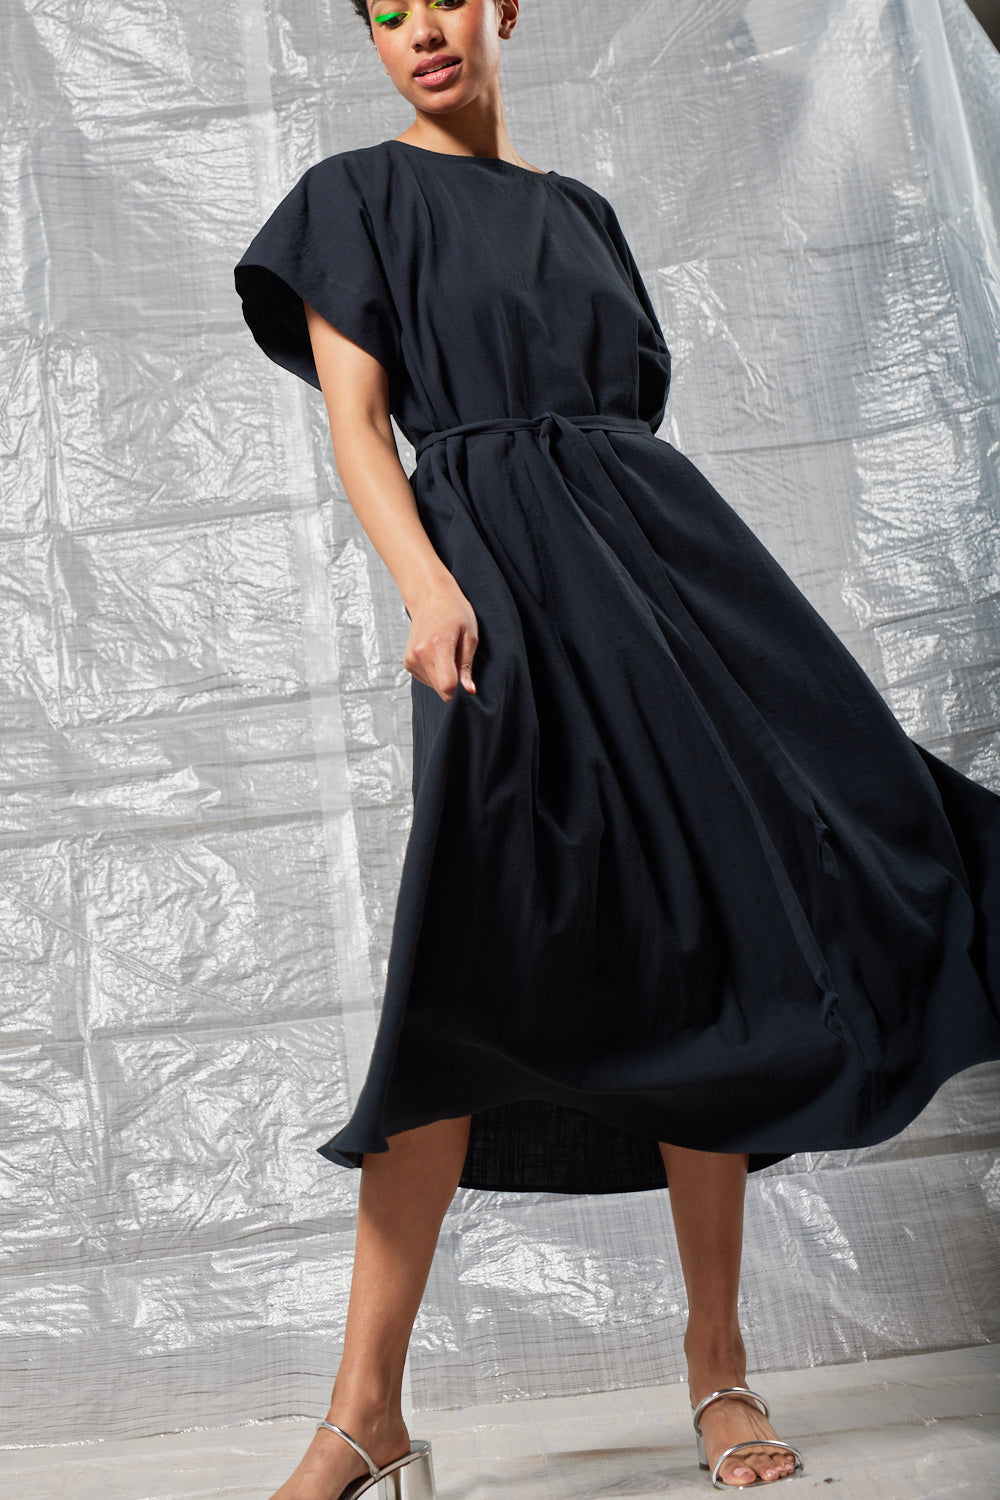 Oversized Tee Dress - Black